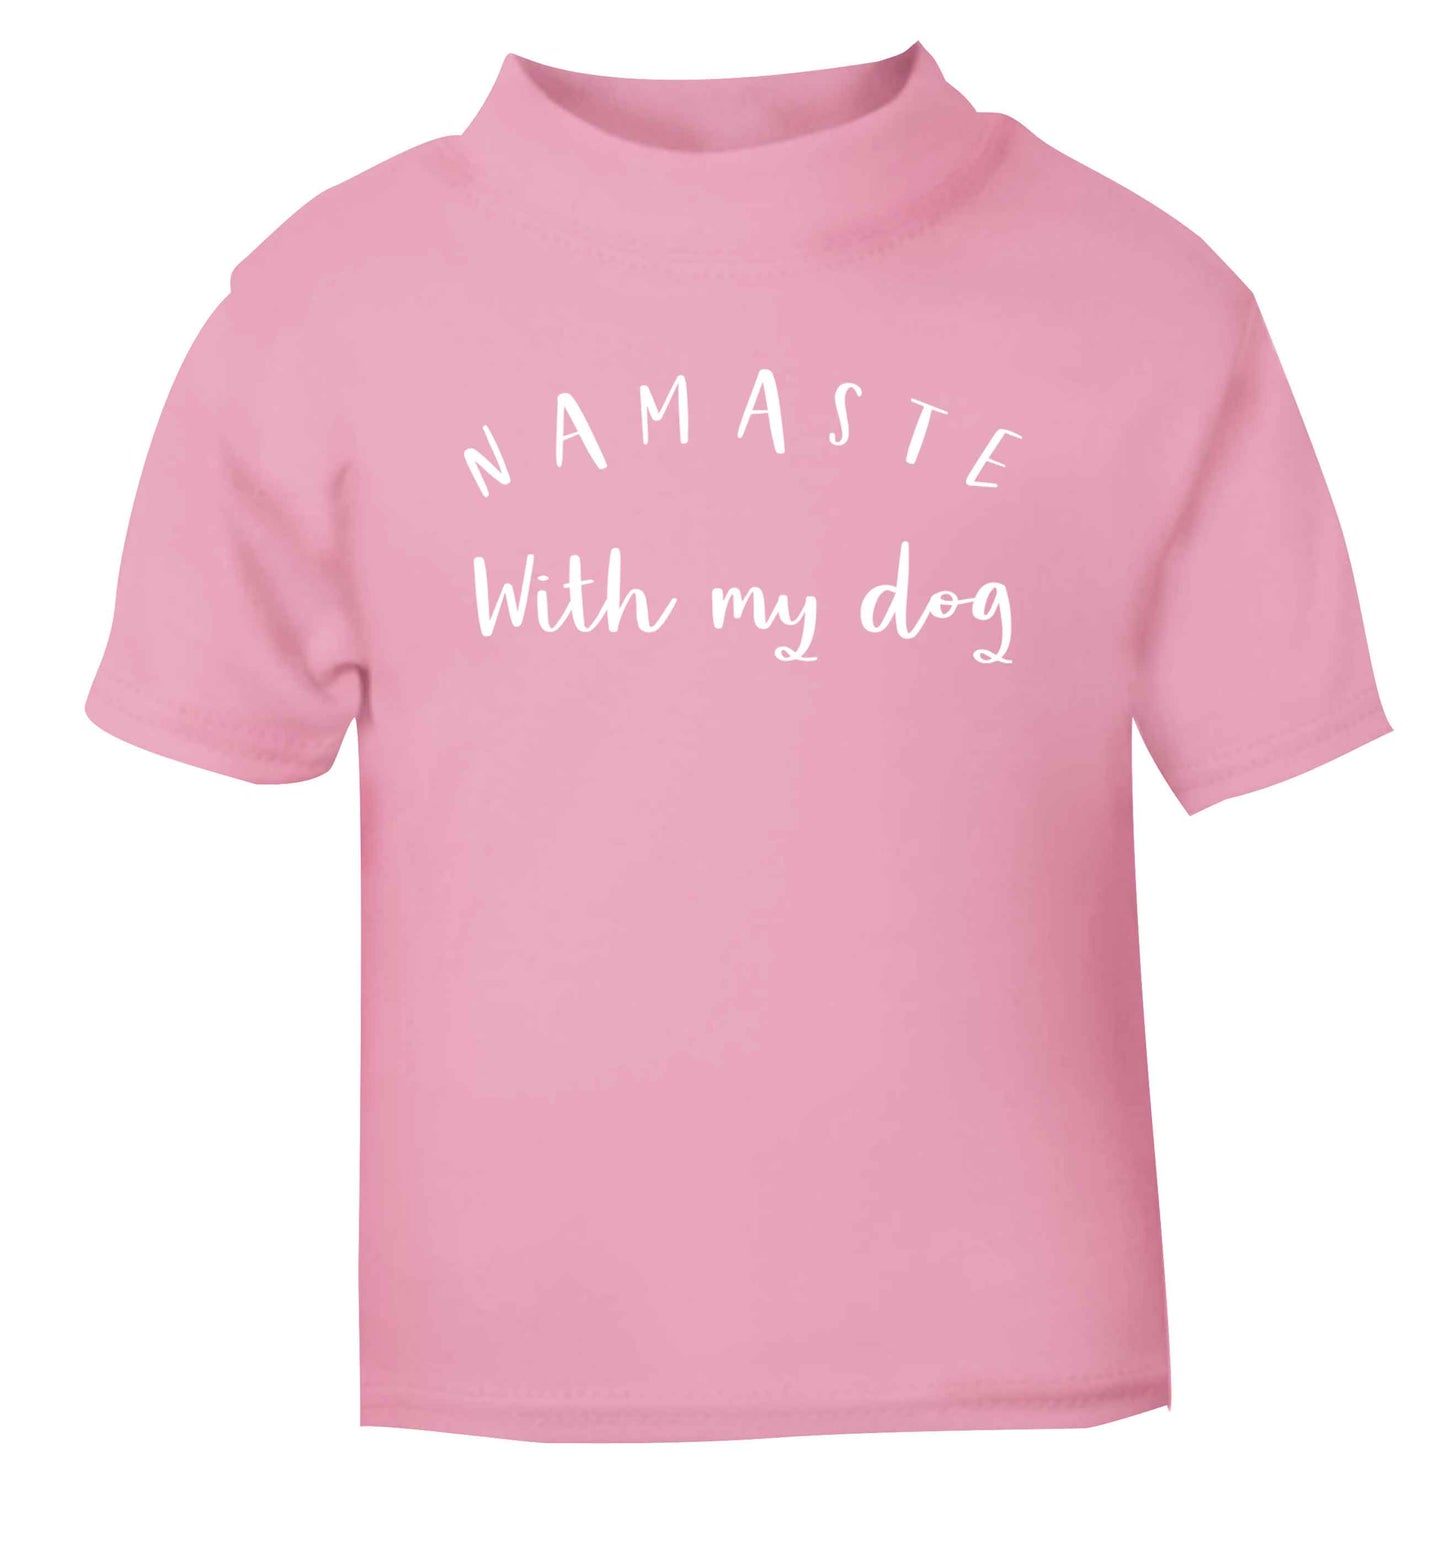 Namaste with my dog light pink Baby Toddler Tshirt 2 Years